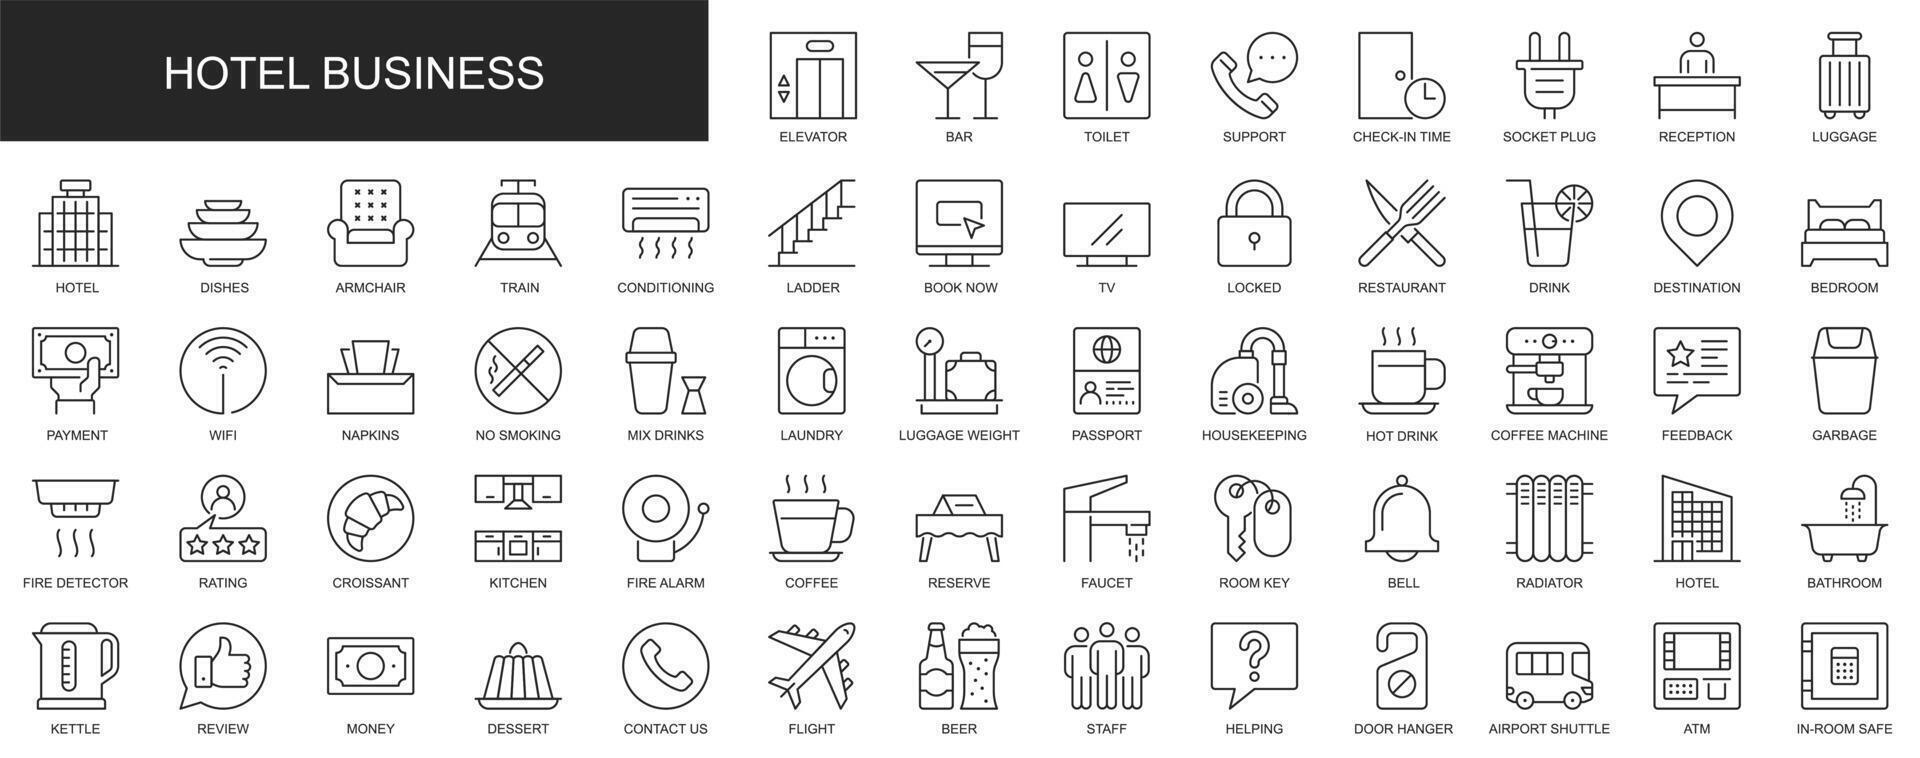 Hotel business web icons set in thin line design. Pack of elevator, bar, toilet, reception, luggage, restaurant, kitchen, bedroom, reserve, room, other outline stroke pictograms. illustration. vector